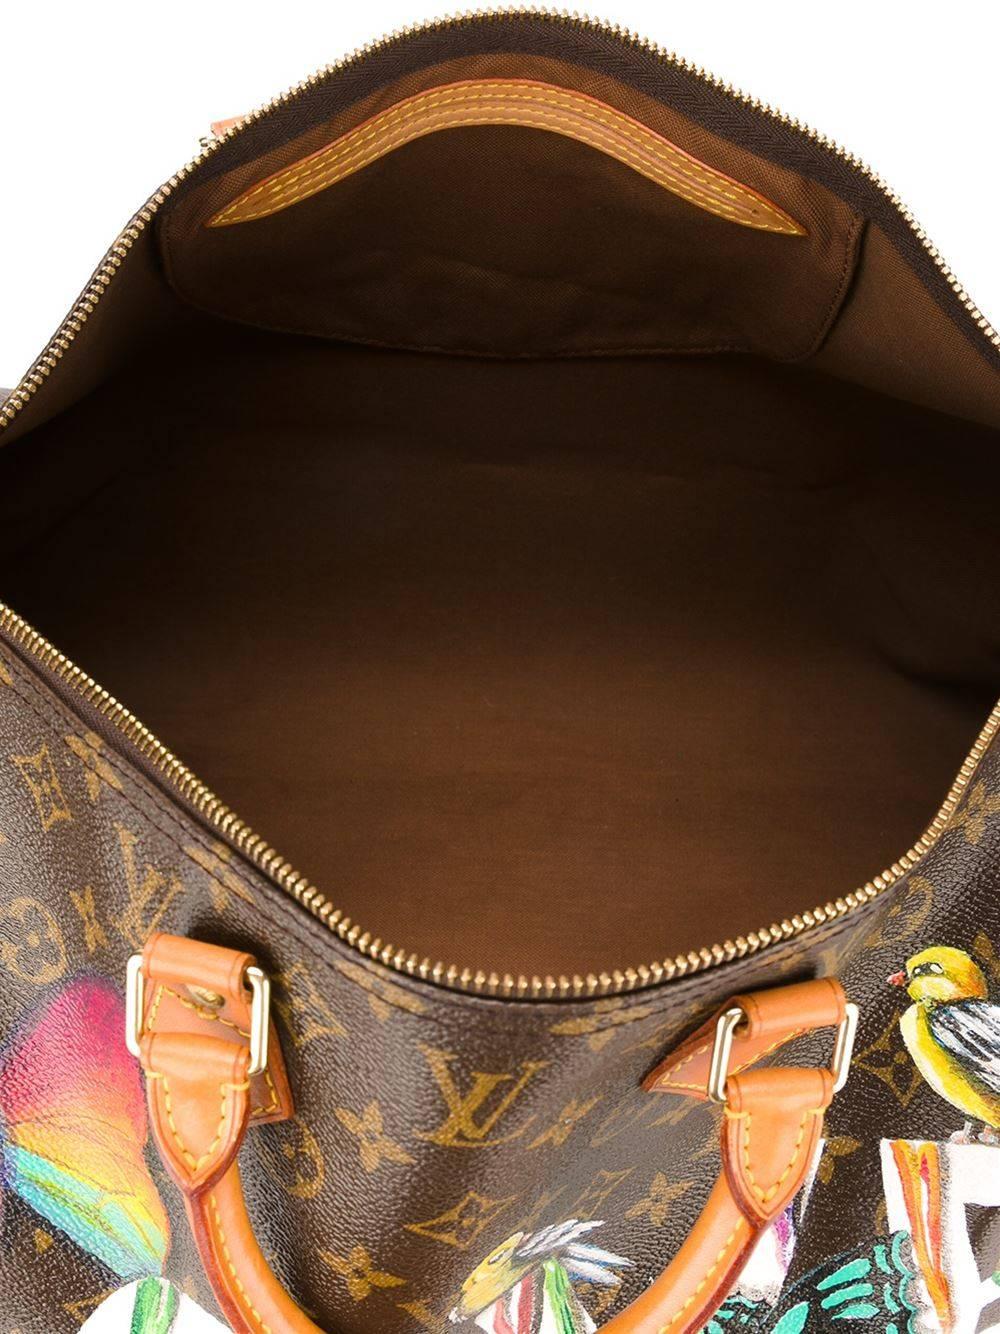 customised louis vuitton bag